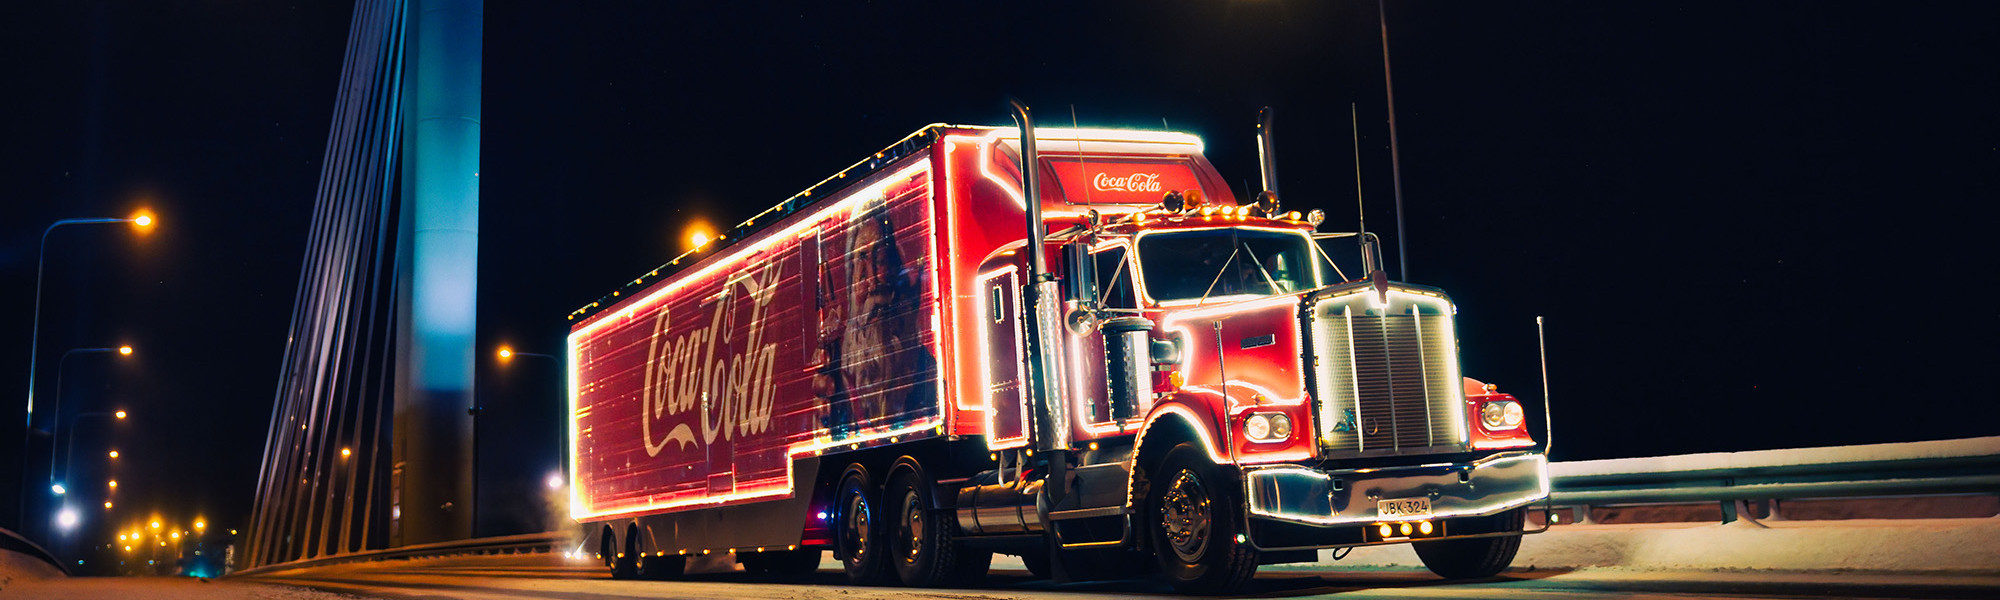 Coca Cola -joulurekka